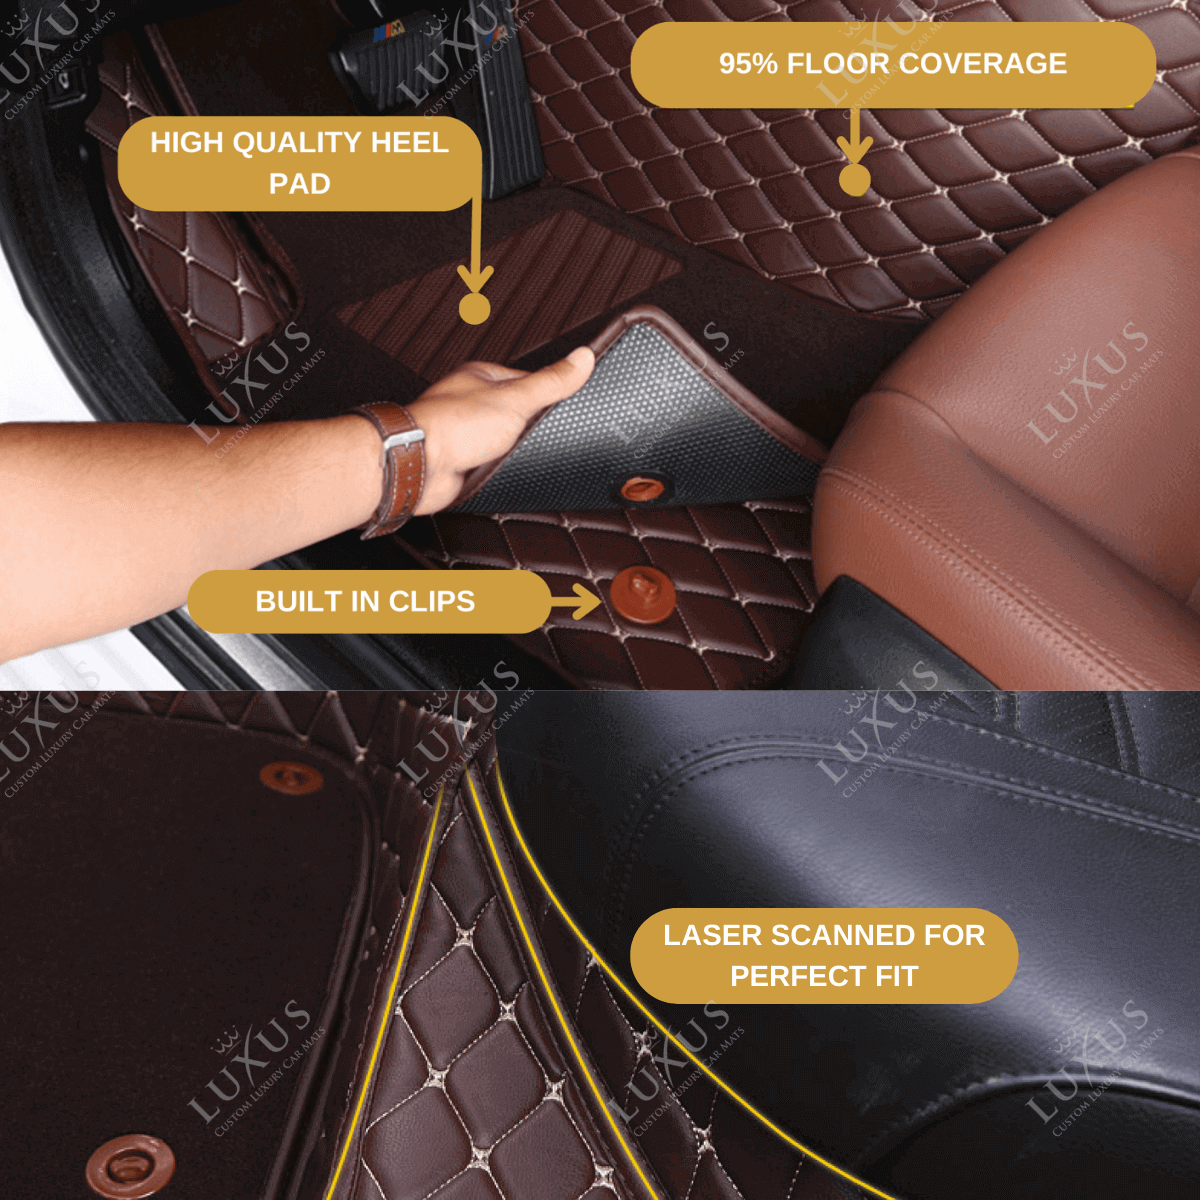 Black & Beige Stitching Base & Grey Top Carpet Double Layer Luxury Car Mats Set